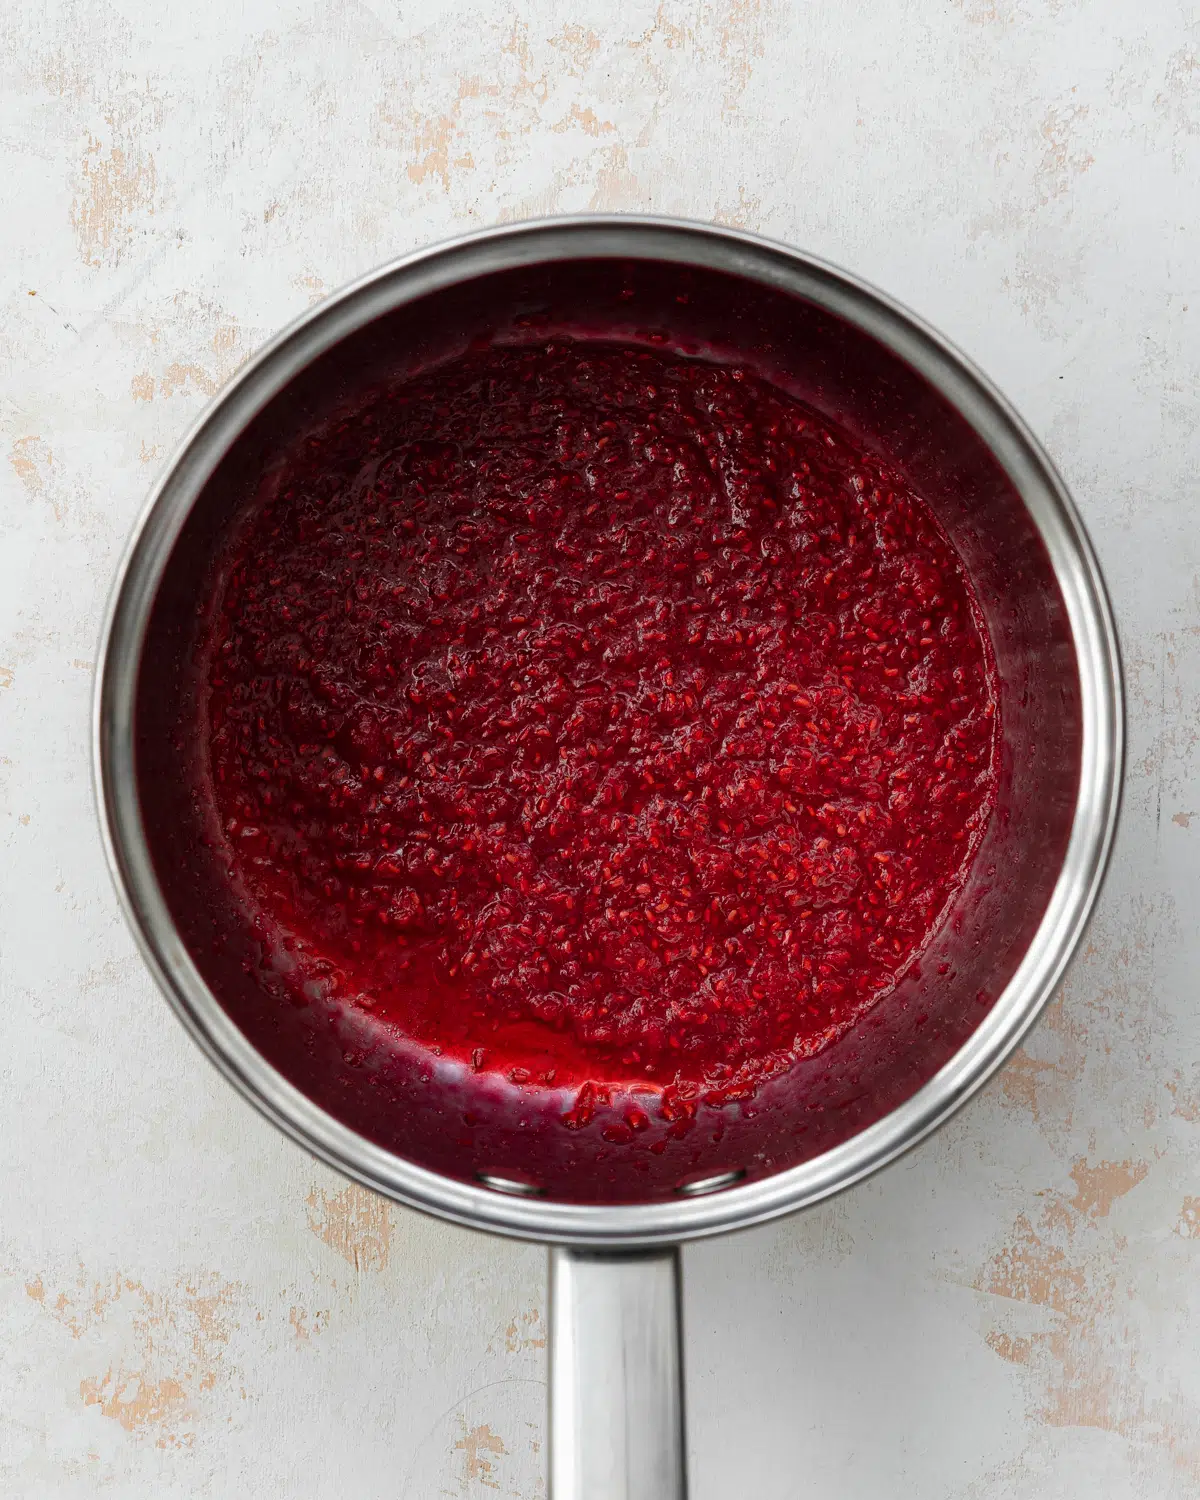 raspberry coulis in a saucepan.